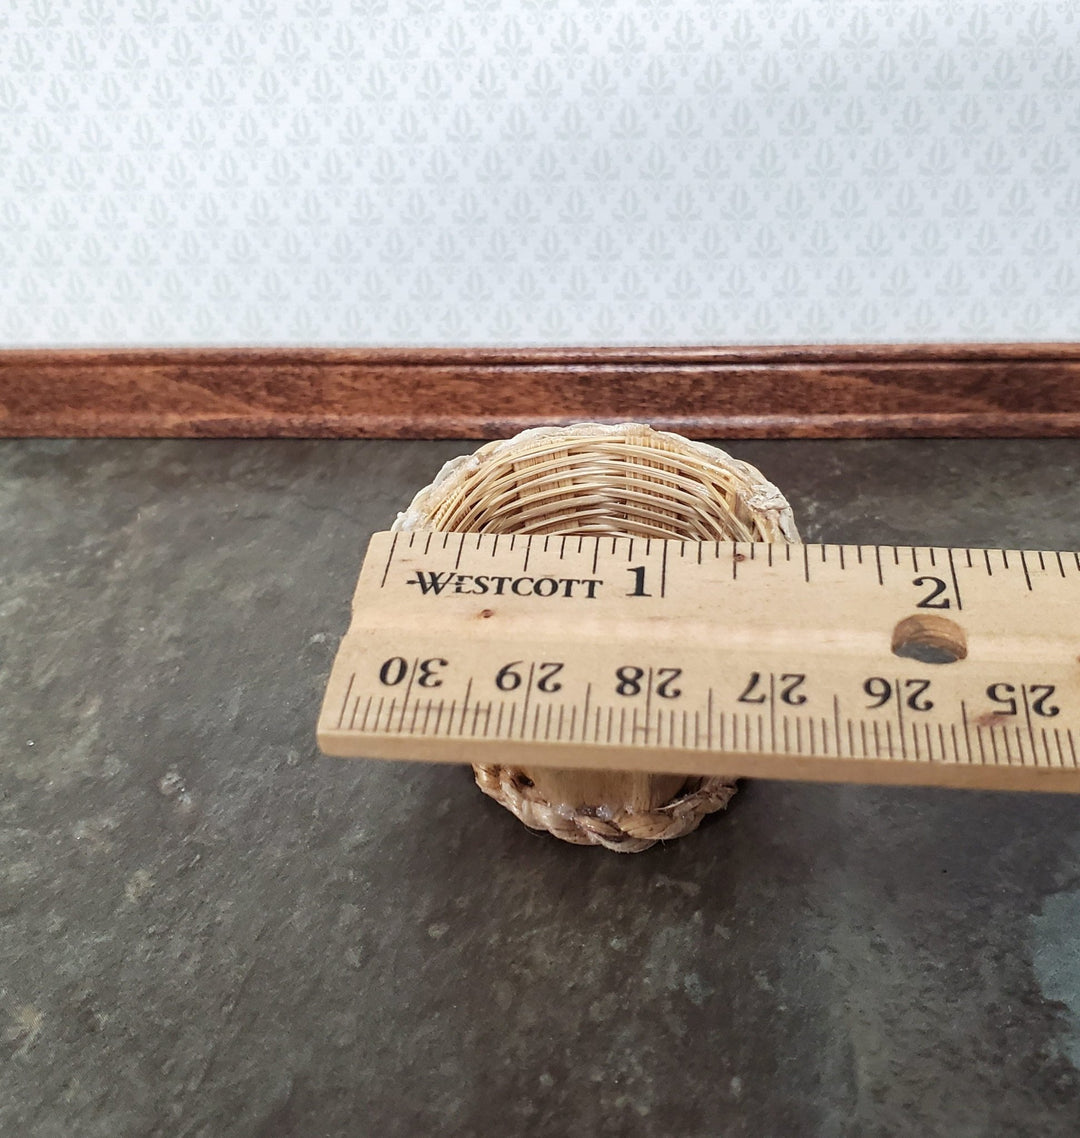 Dollhouse Bushel Basket Empty Natural Fiber 1:12 Scale Miniature - Miniature Crush